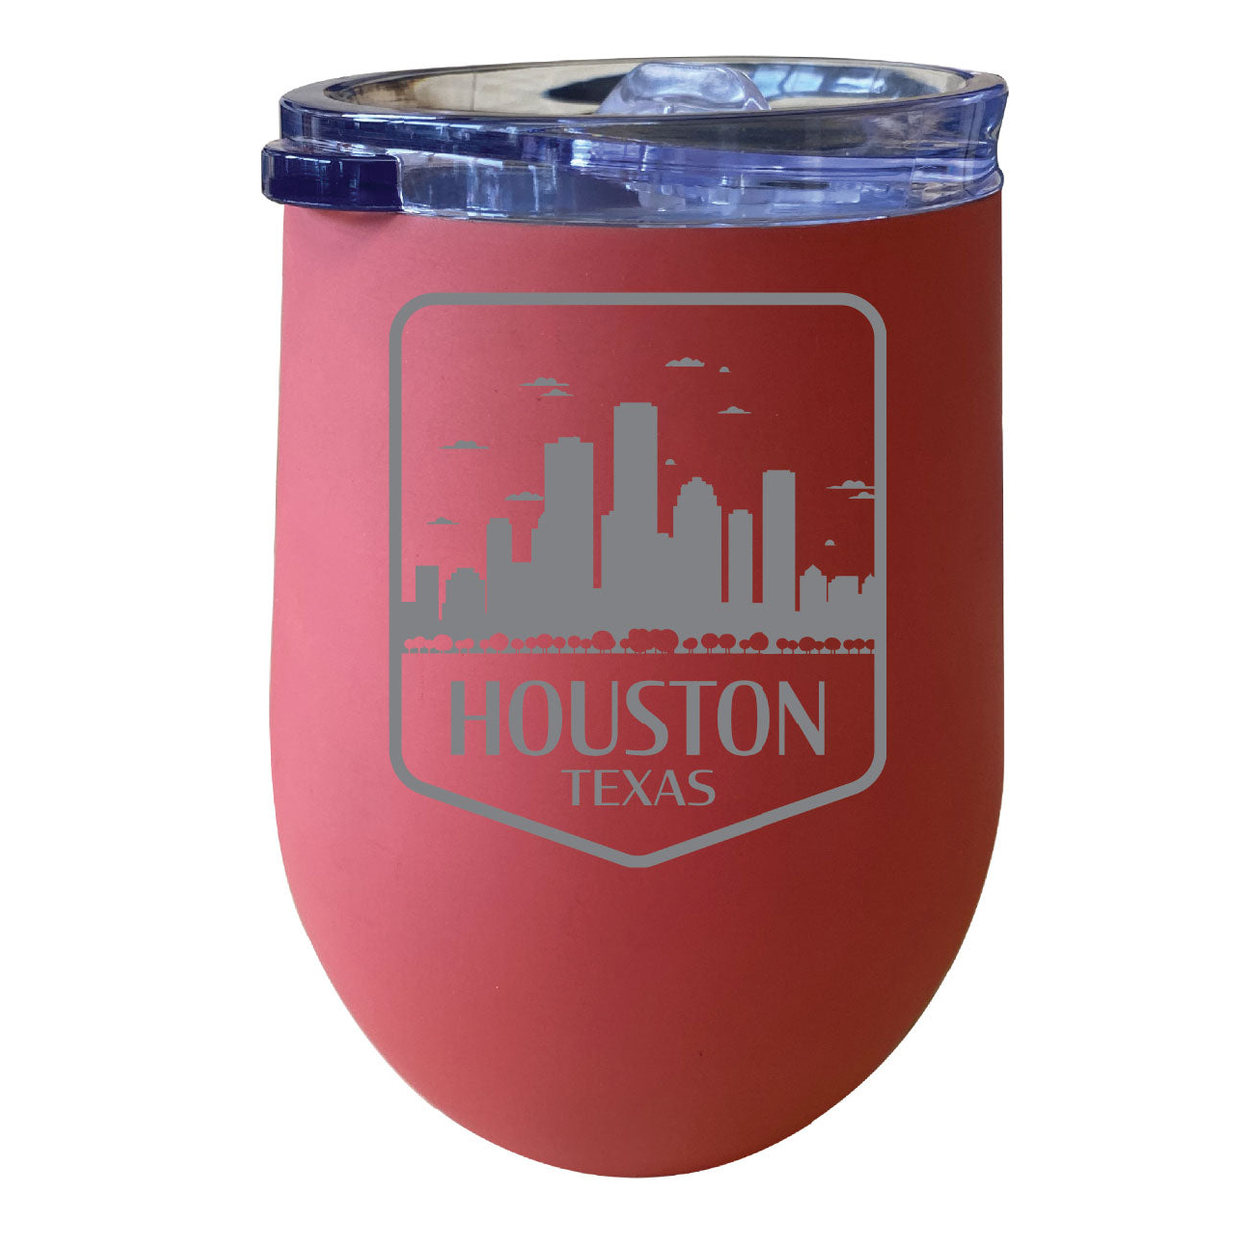 Houston Texas Souvenir 12 Oz Engraved Insulated Wine Stainless Steel Tumbler - Coral,,Single Unit